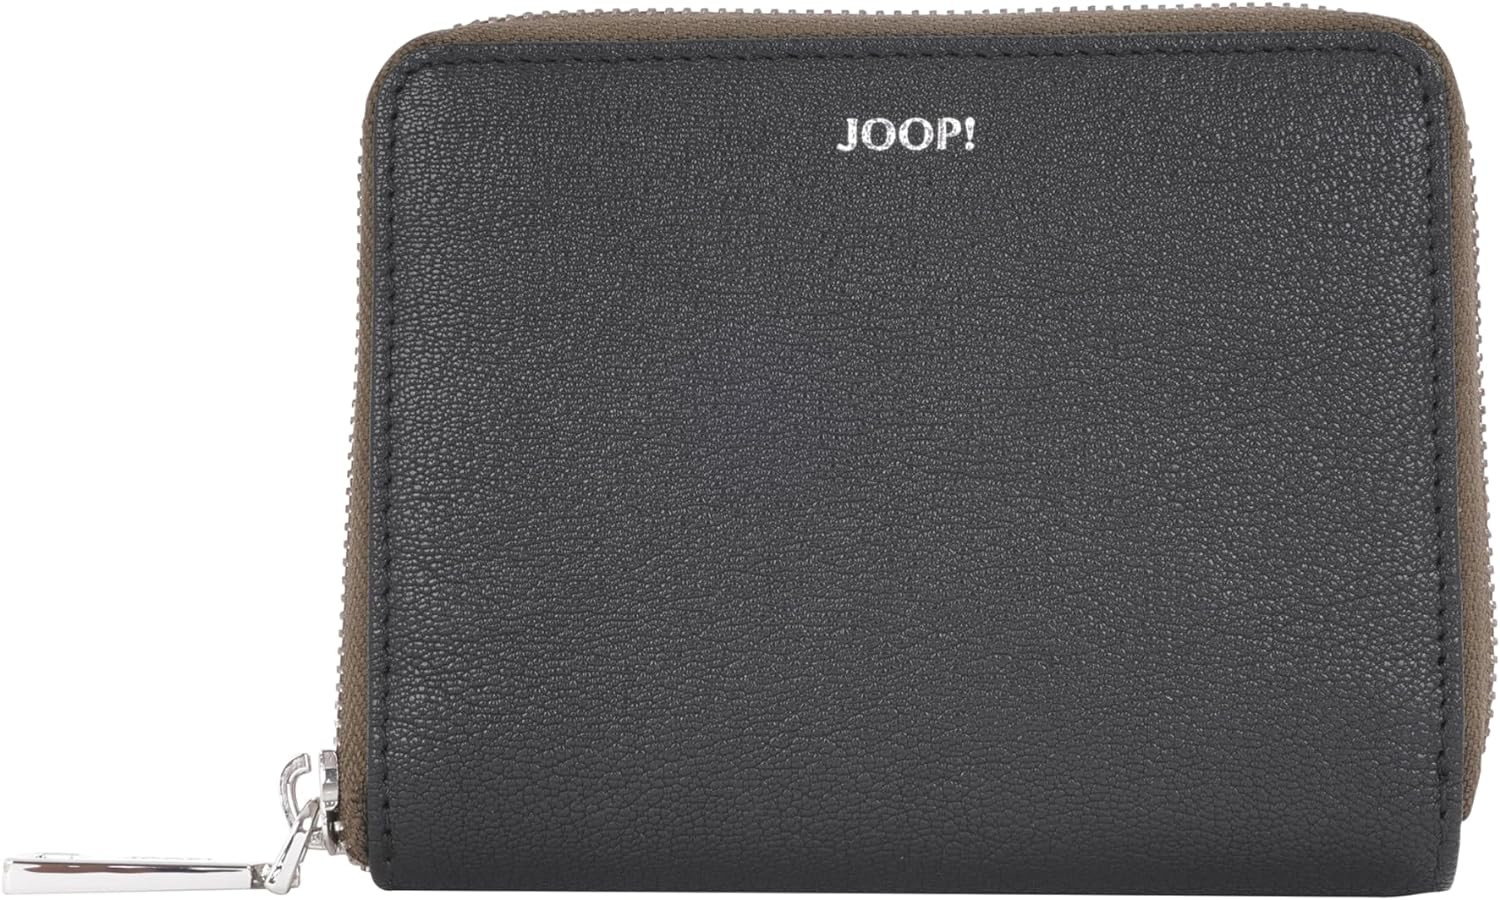 Joop 'Lantea Blocking Nisa' Reißverschlussbörse RFID purse mh6z echt Leder schwarz